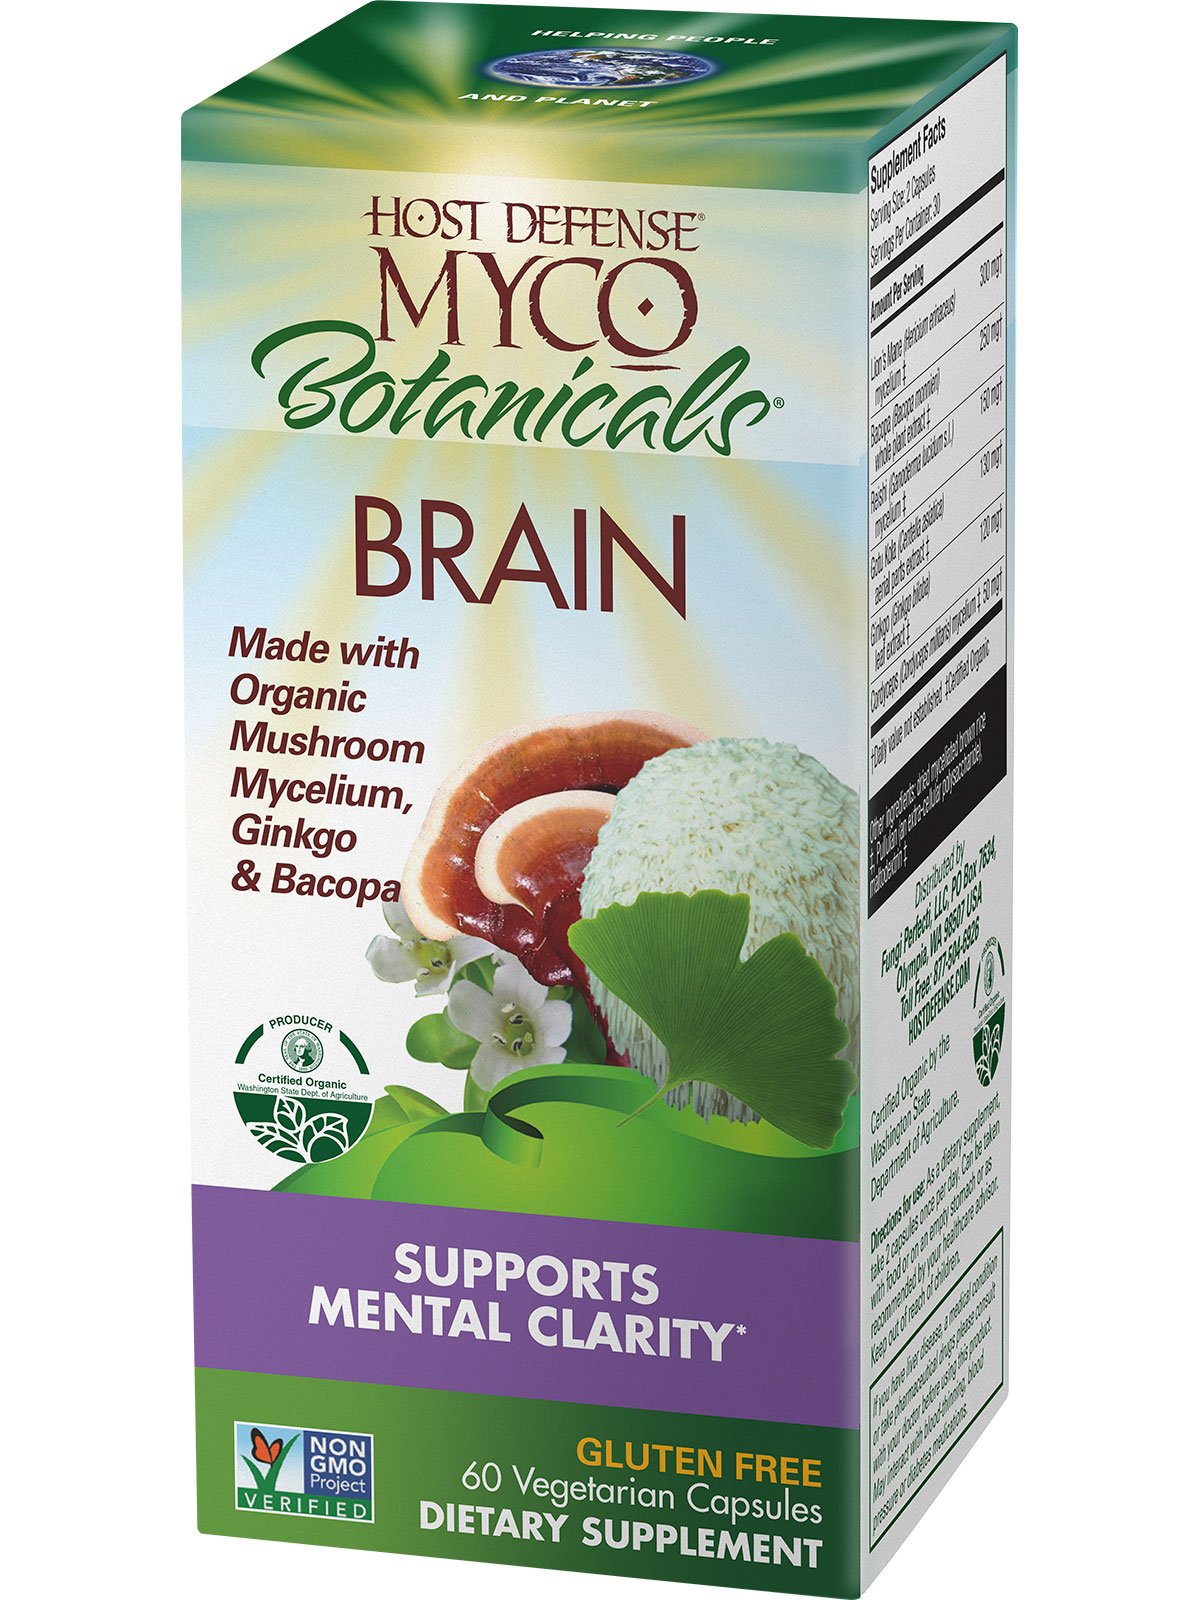 MycoBotanicals® Brain - 60ct